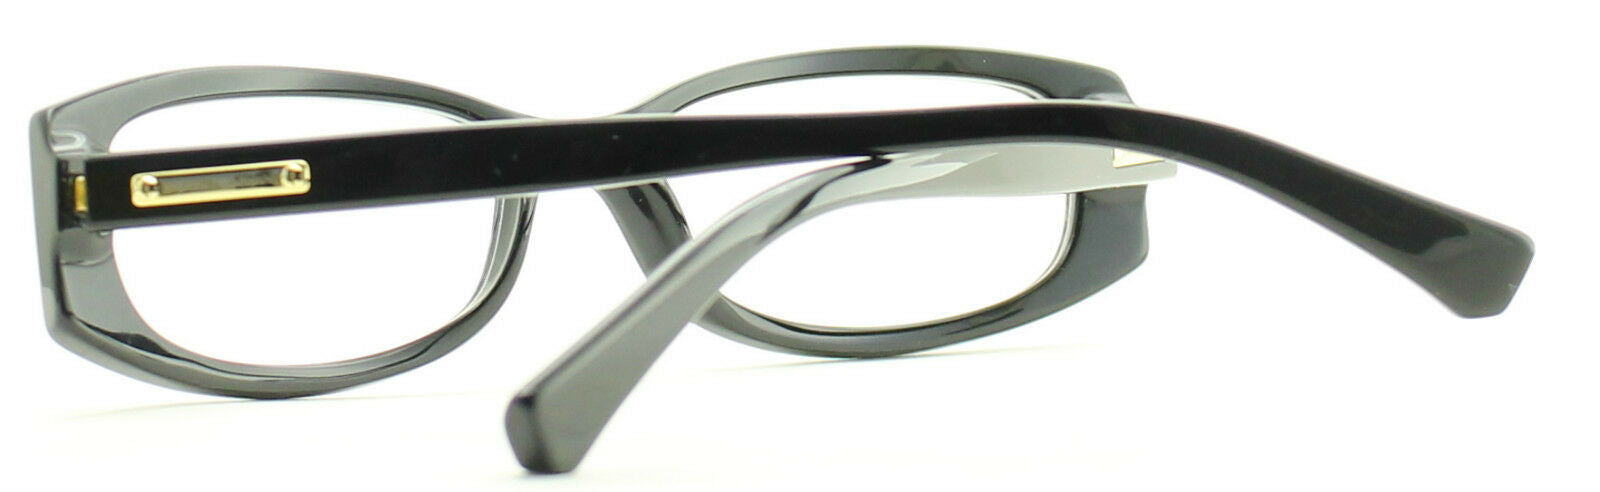 EMPORIO ARMANI EA3007 5017 Eyewear FRAMES RX Optical Glasses Eyeglasses-TRUSTED